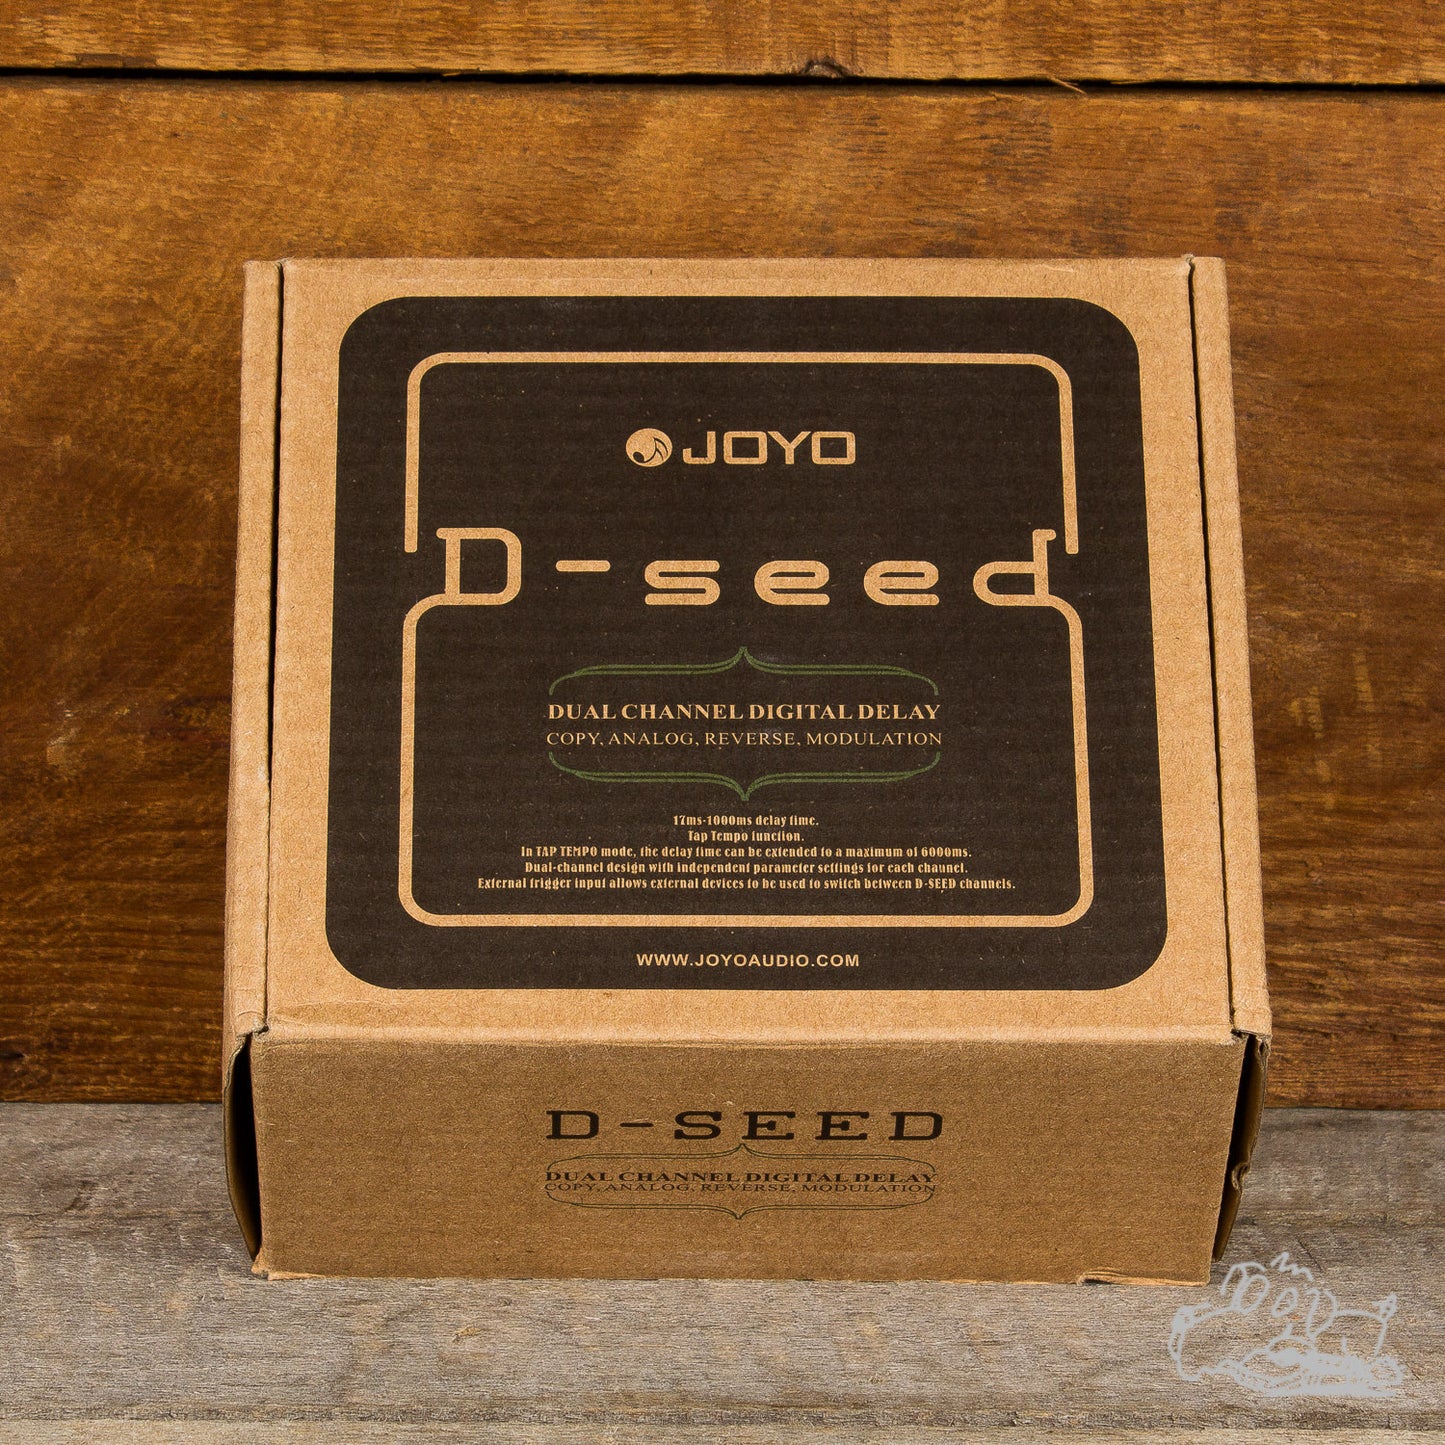 Joyo D-Seed Dual Channel Digital Delay (Copy, Analog, Reverse, Modulation Pedal)